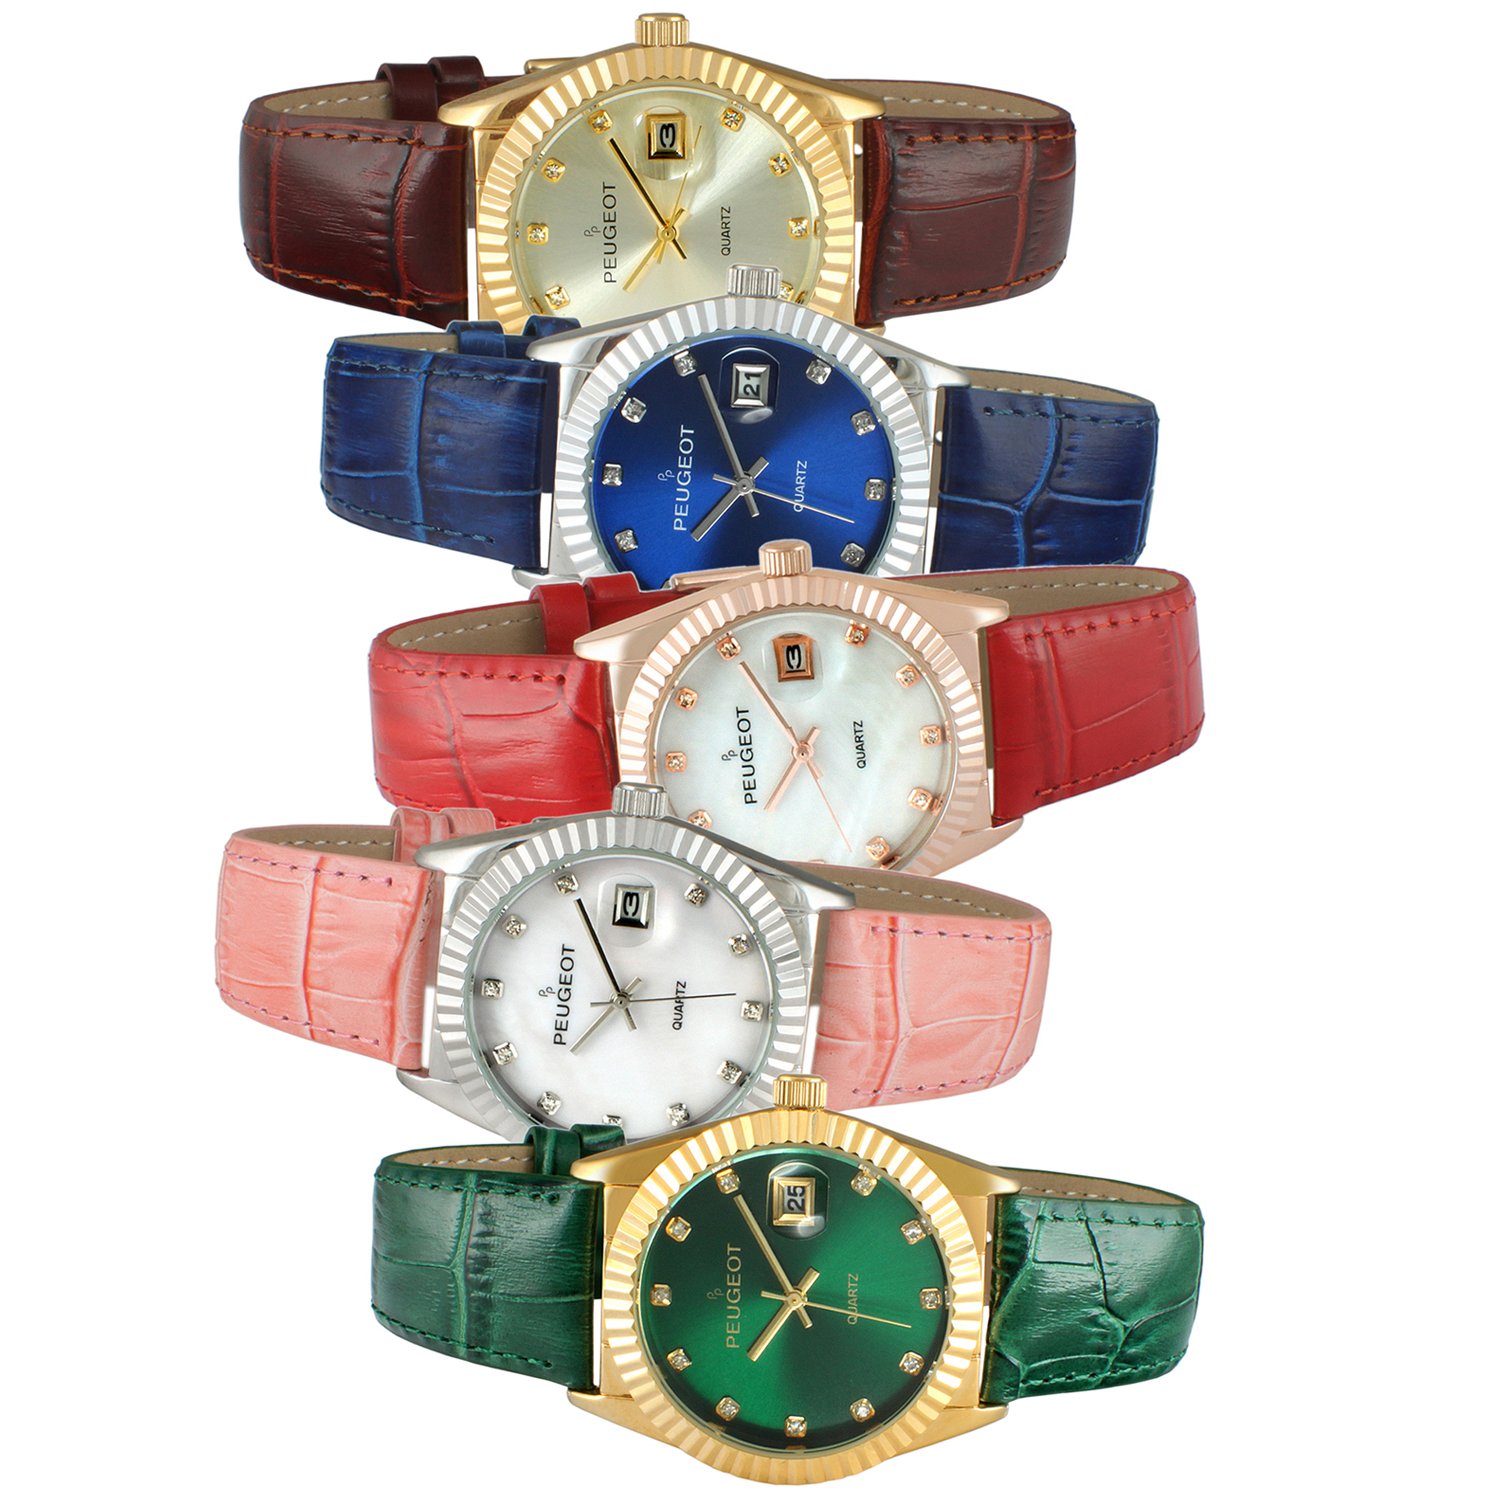 Peugeot Women's Dress Quartz Watch with Coin Edge Bezel, Date Window & Leather Band